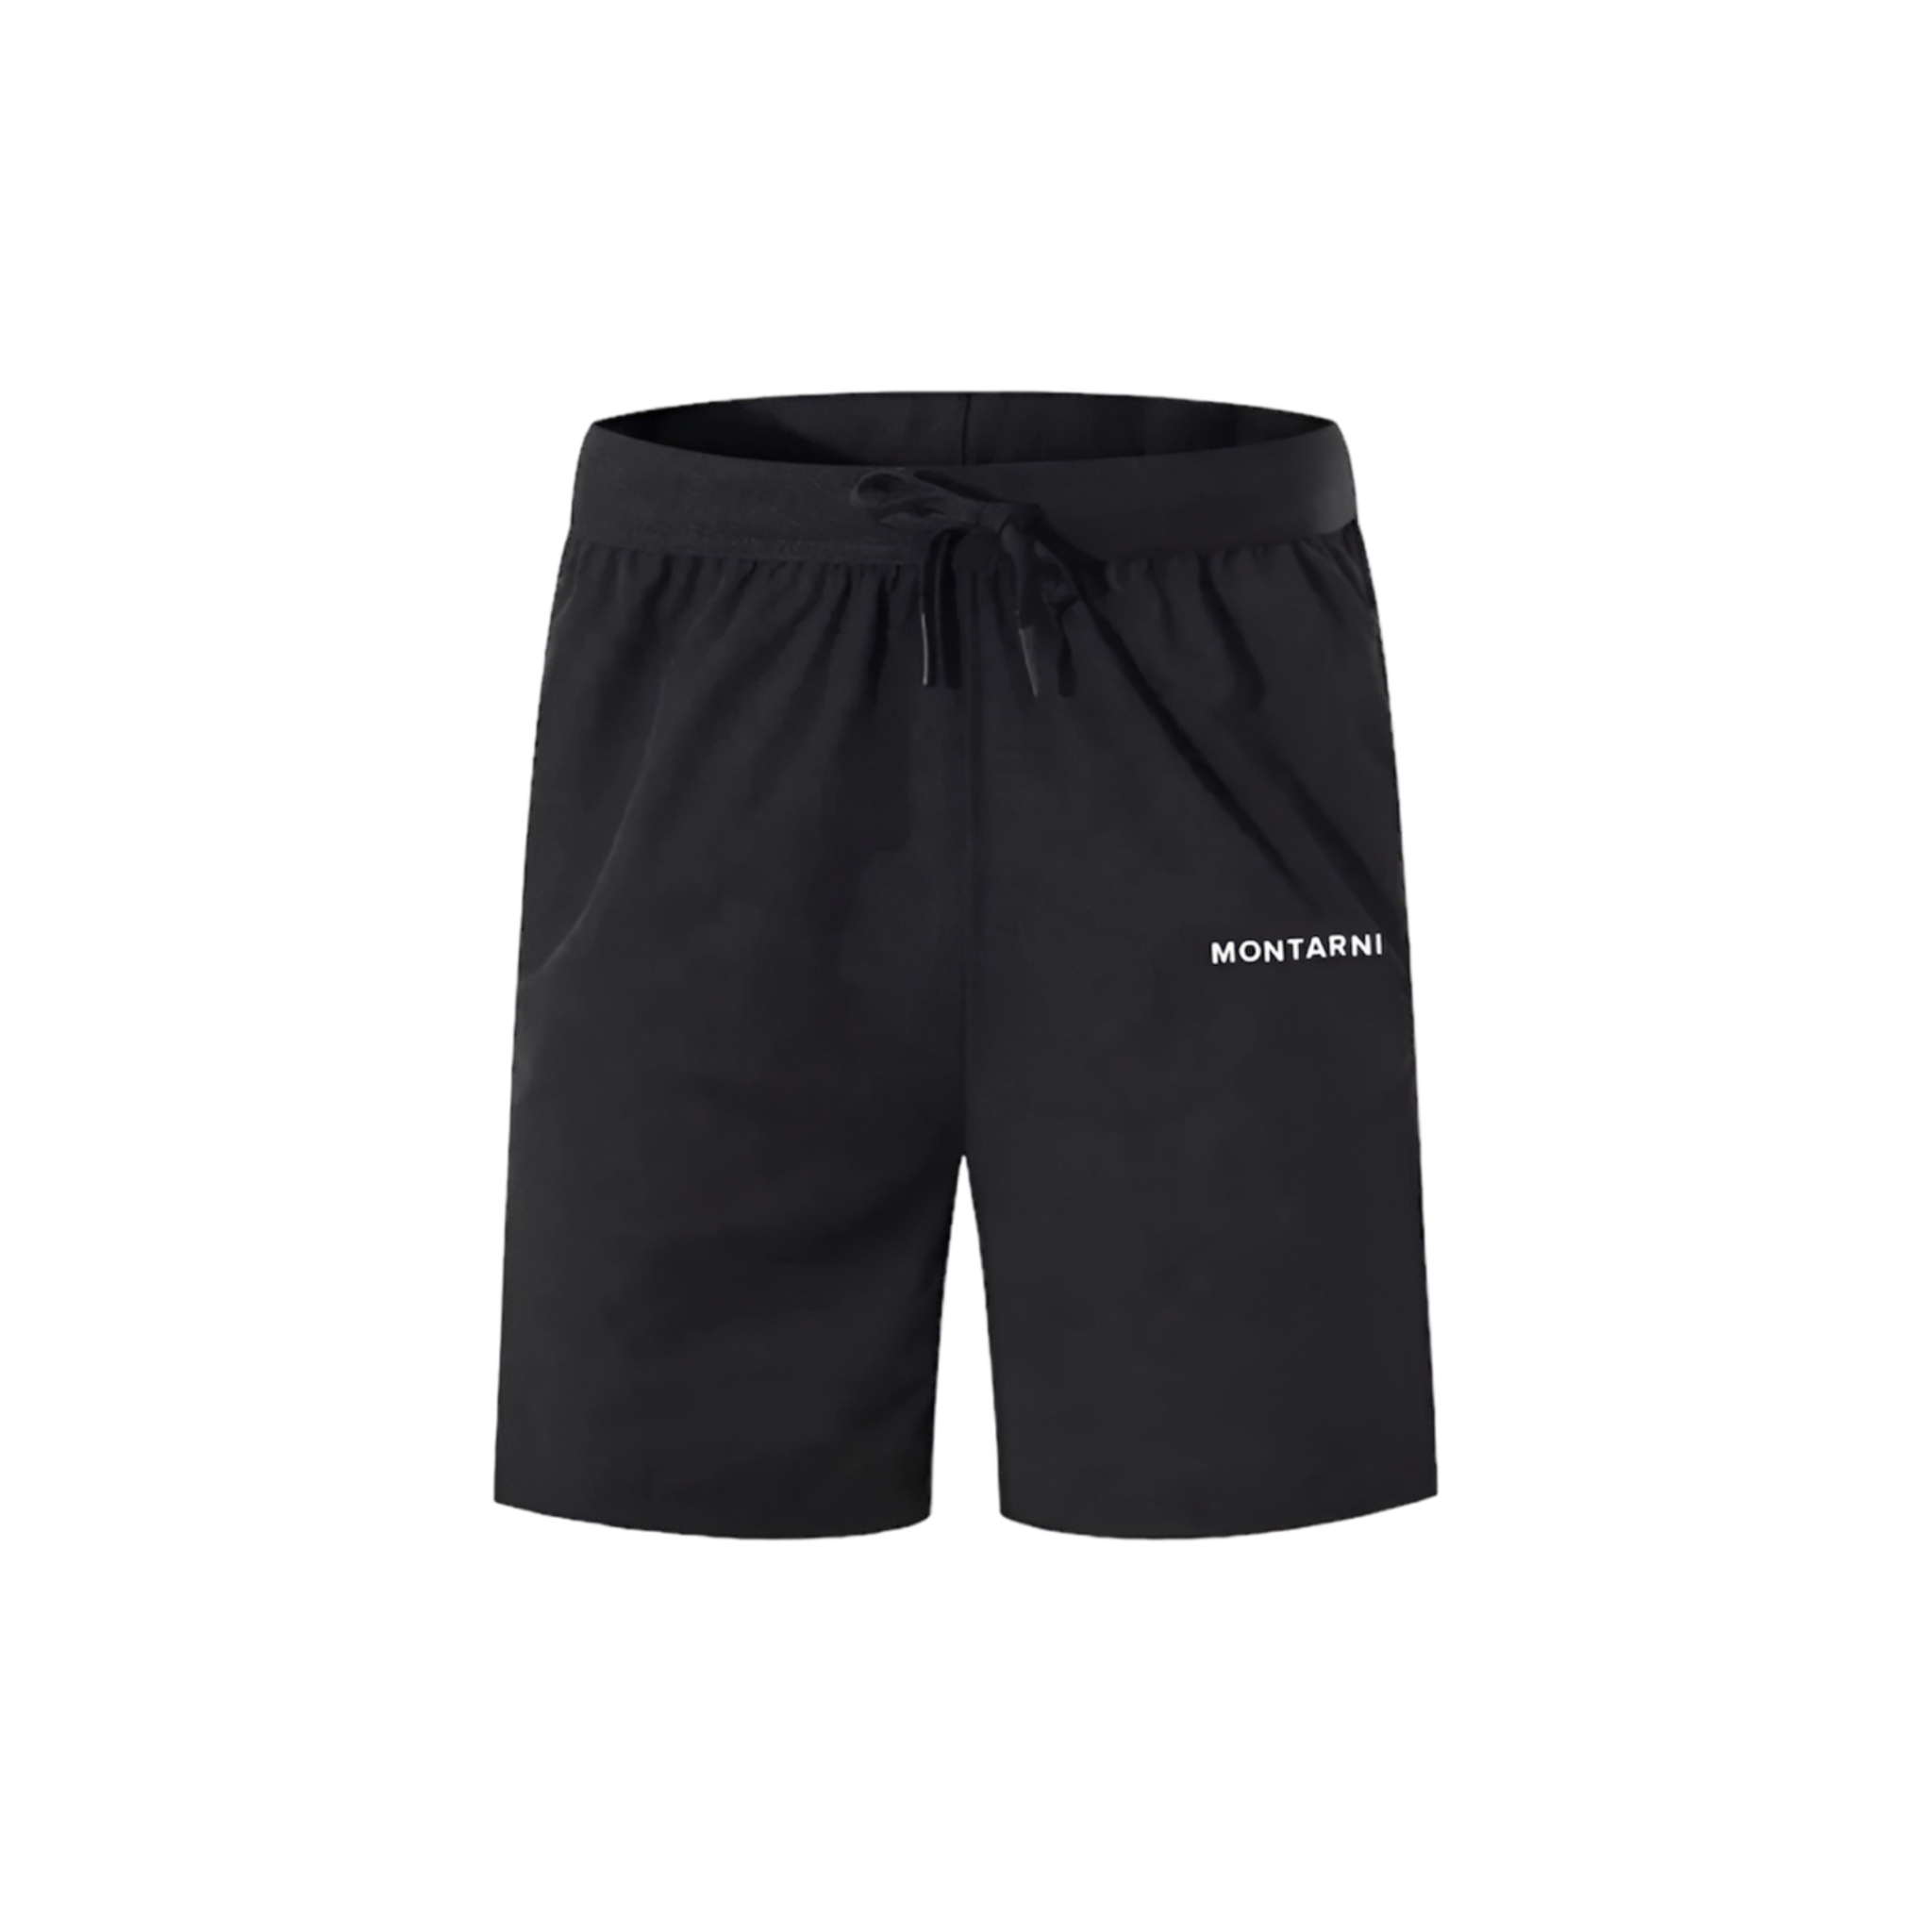 MONTARNI - Black Draft Shorts